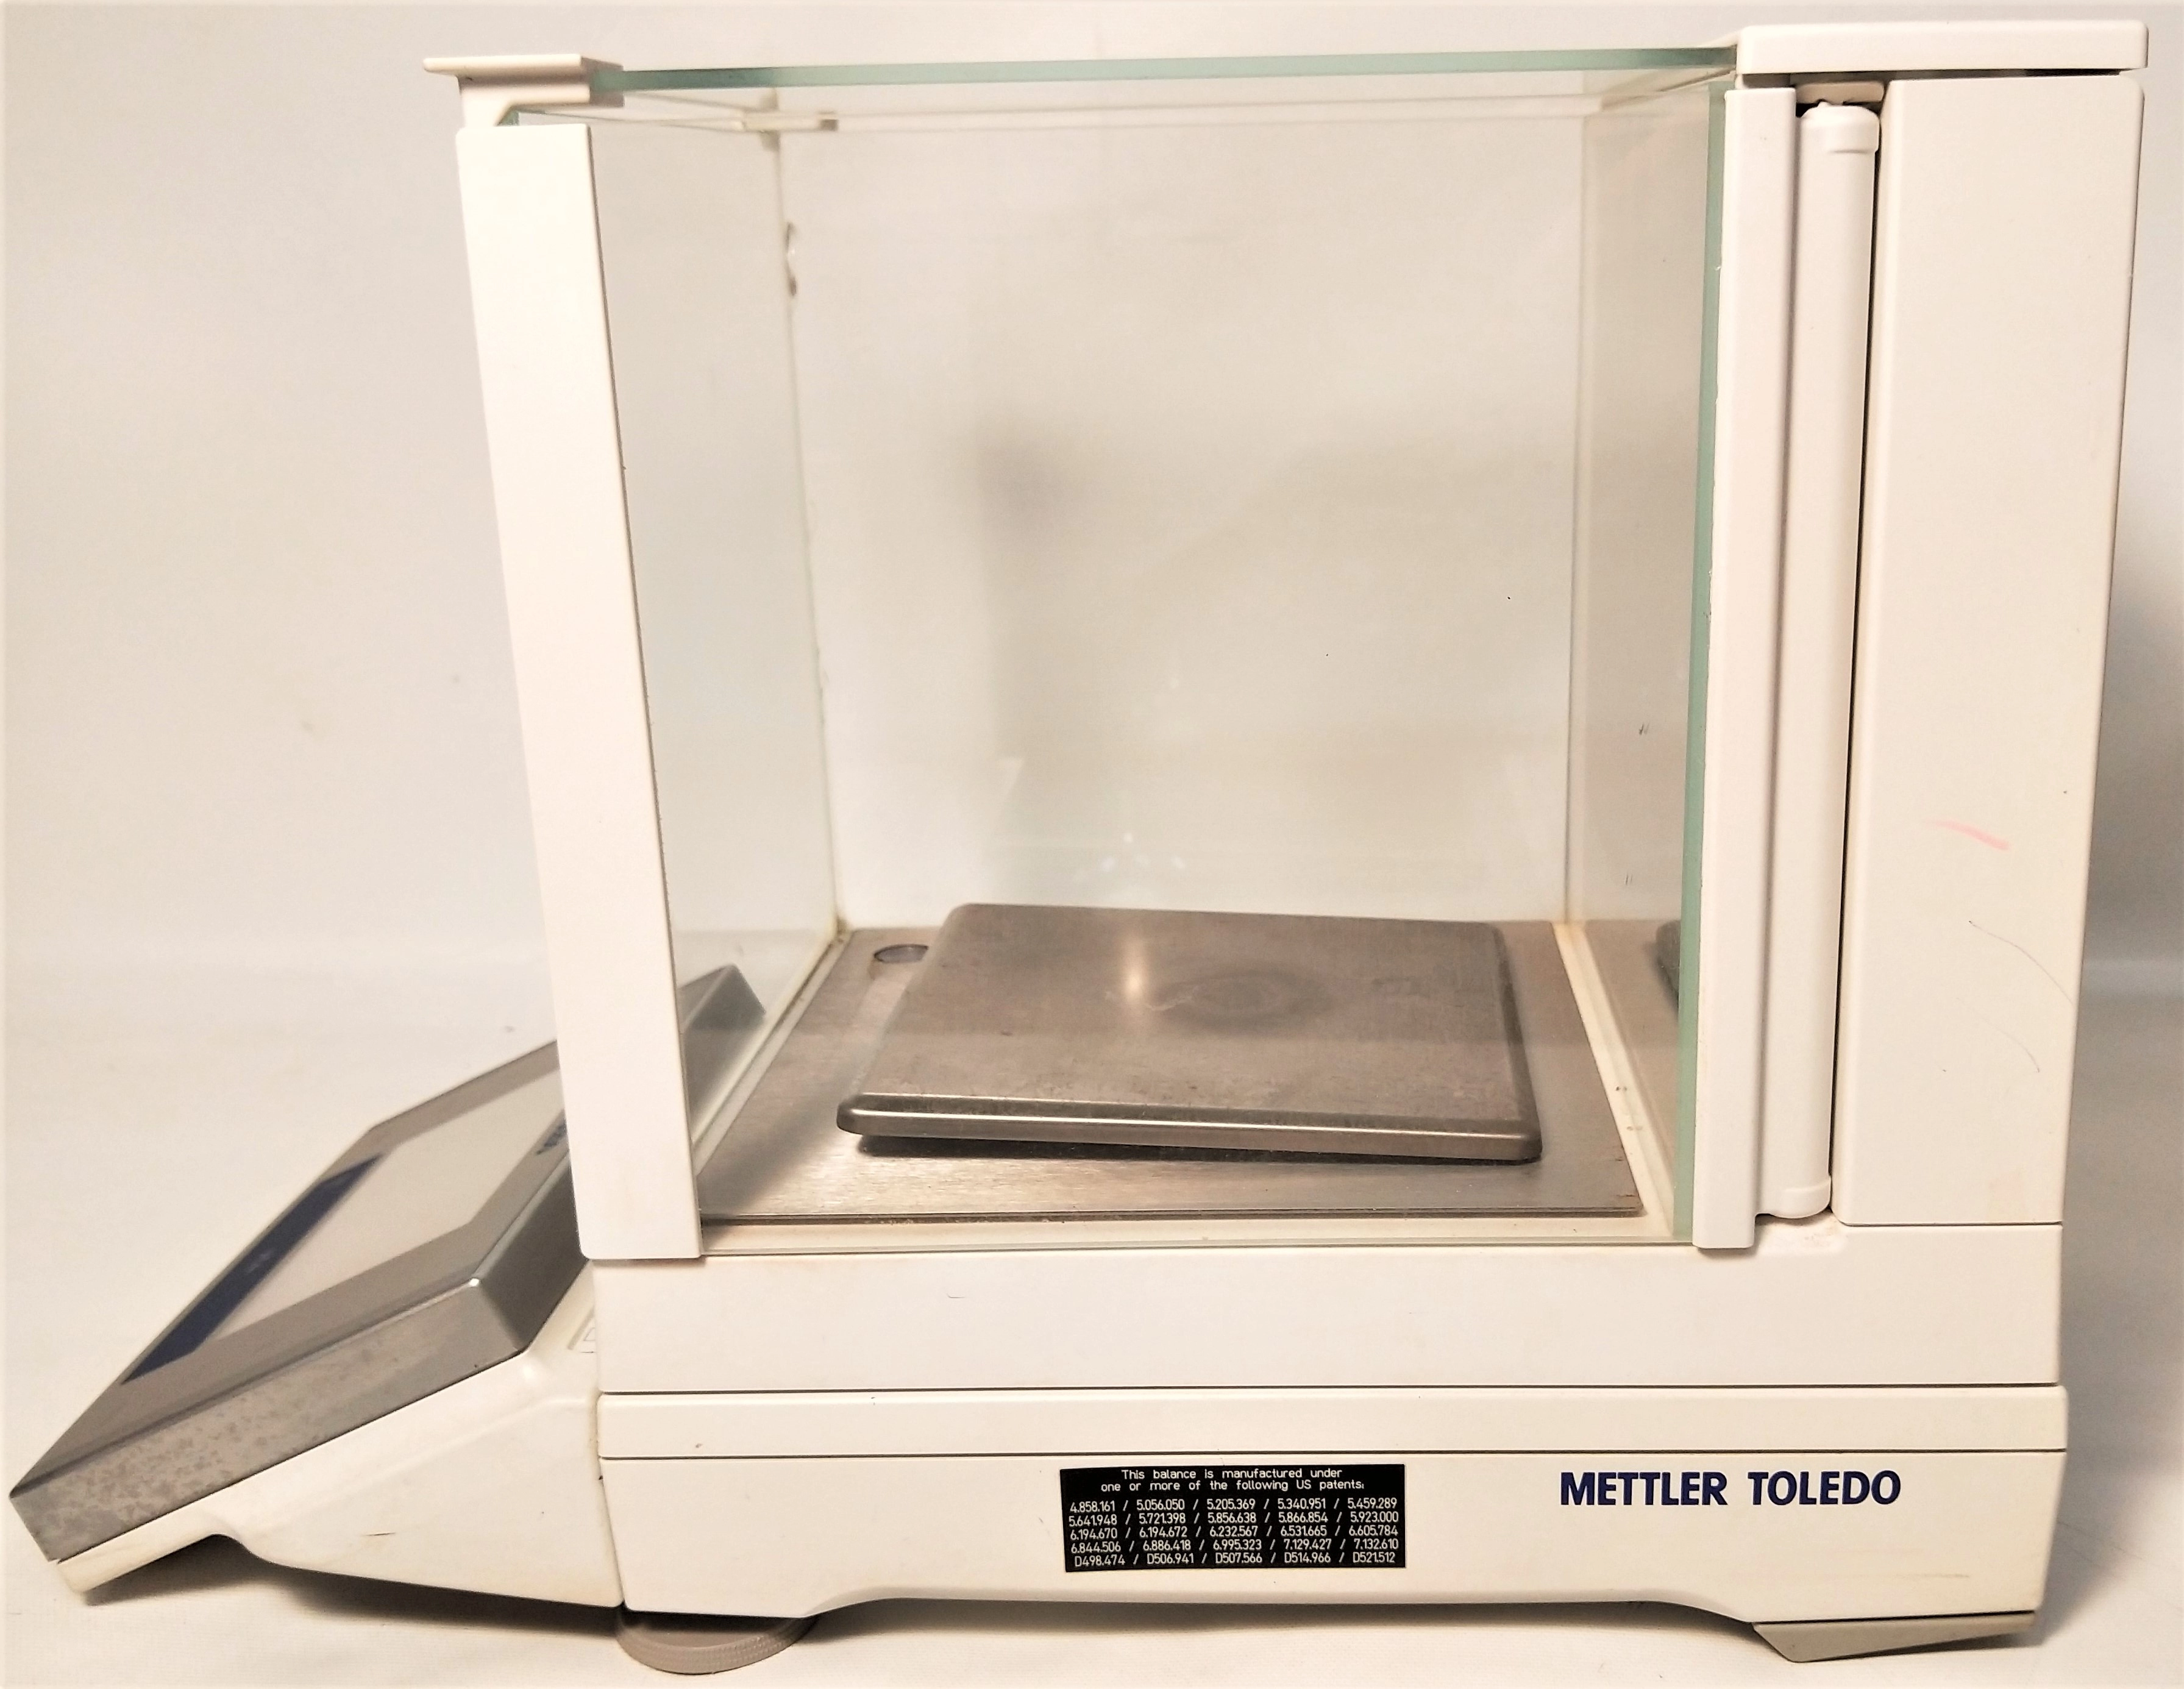 Used Mettler Toledo AG204DR Delta-Range Balance - 61g x 0.1mg / 210g x 1mg  for Sale at Chemistry